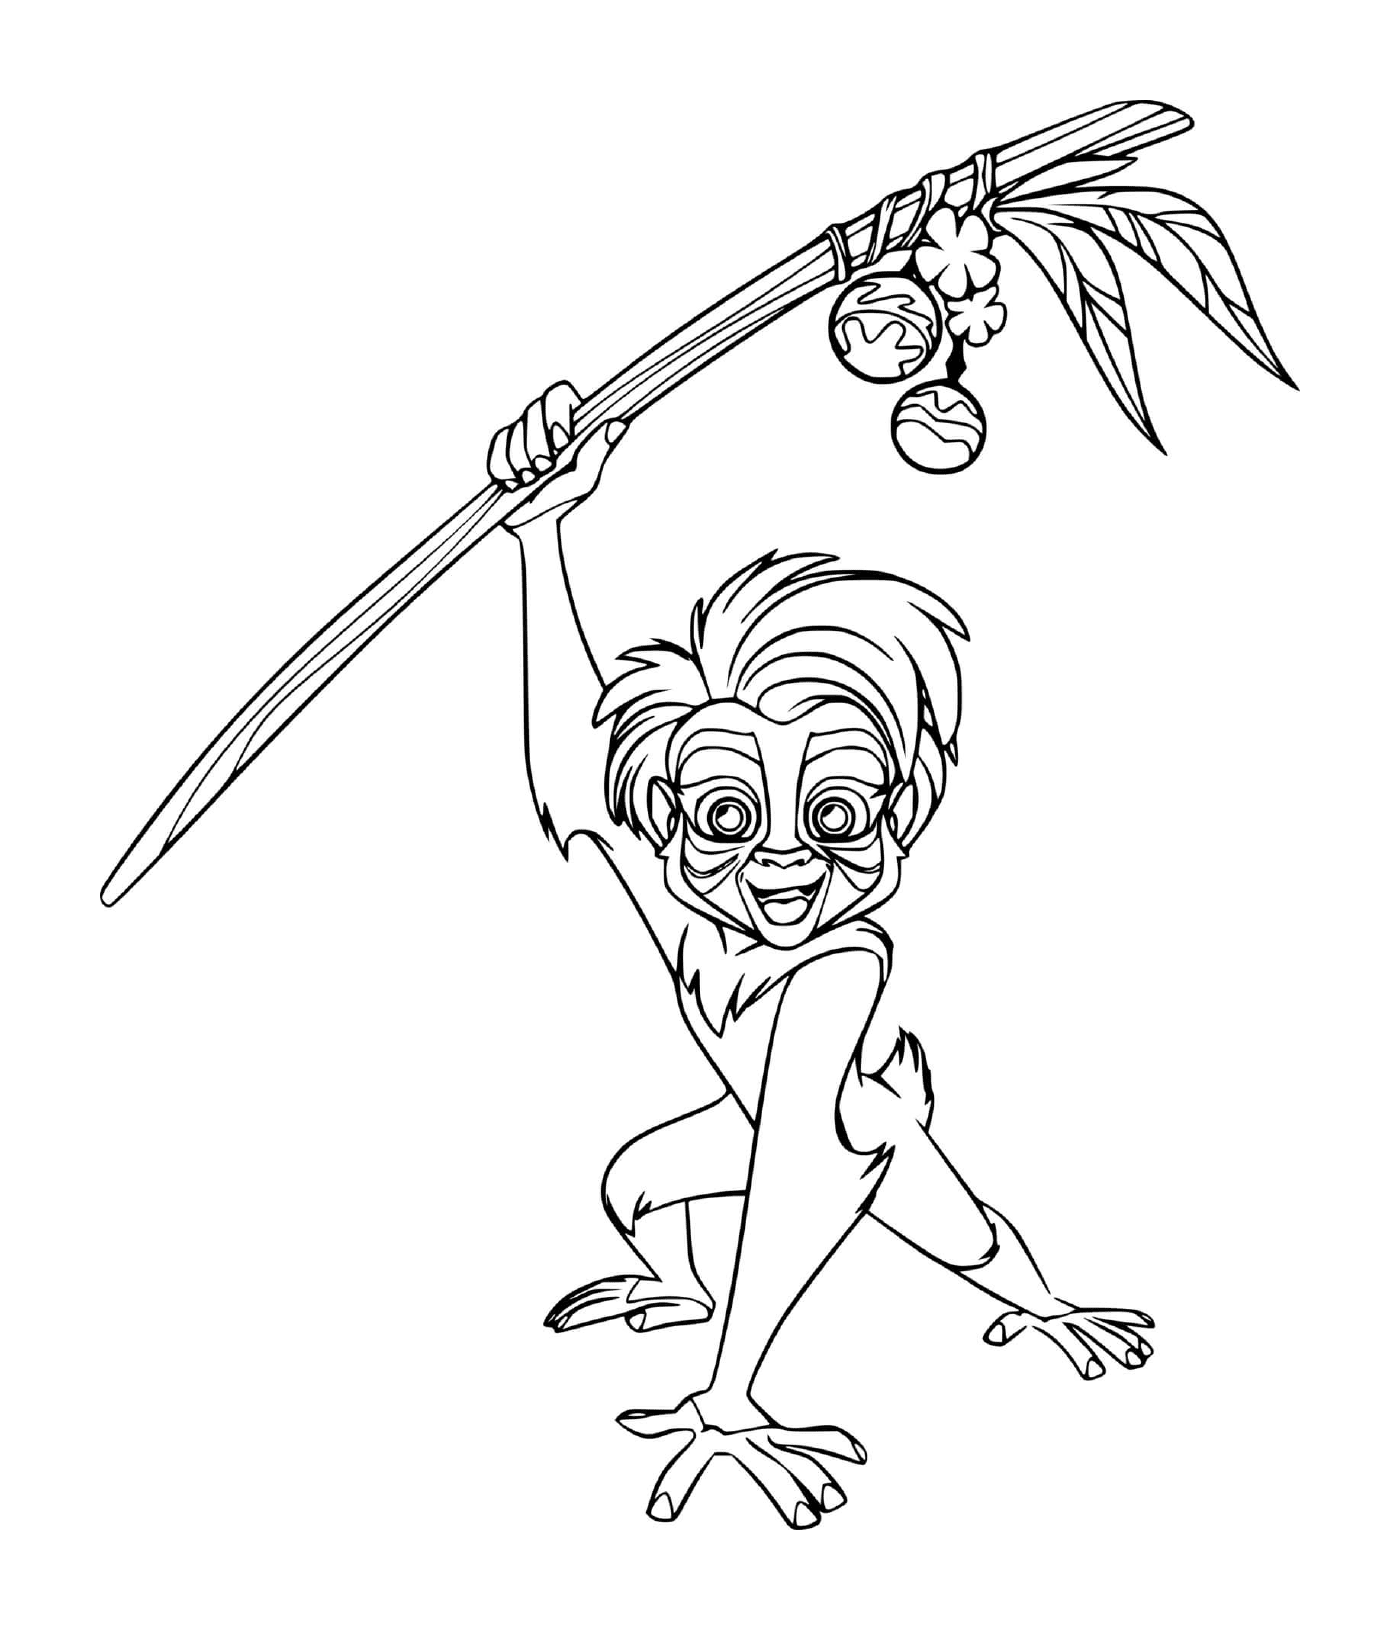  Young Rafiki brandishing a spear 